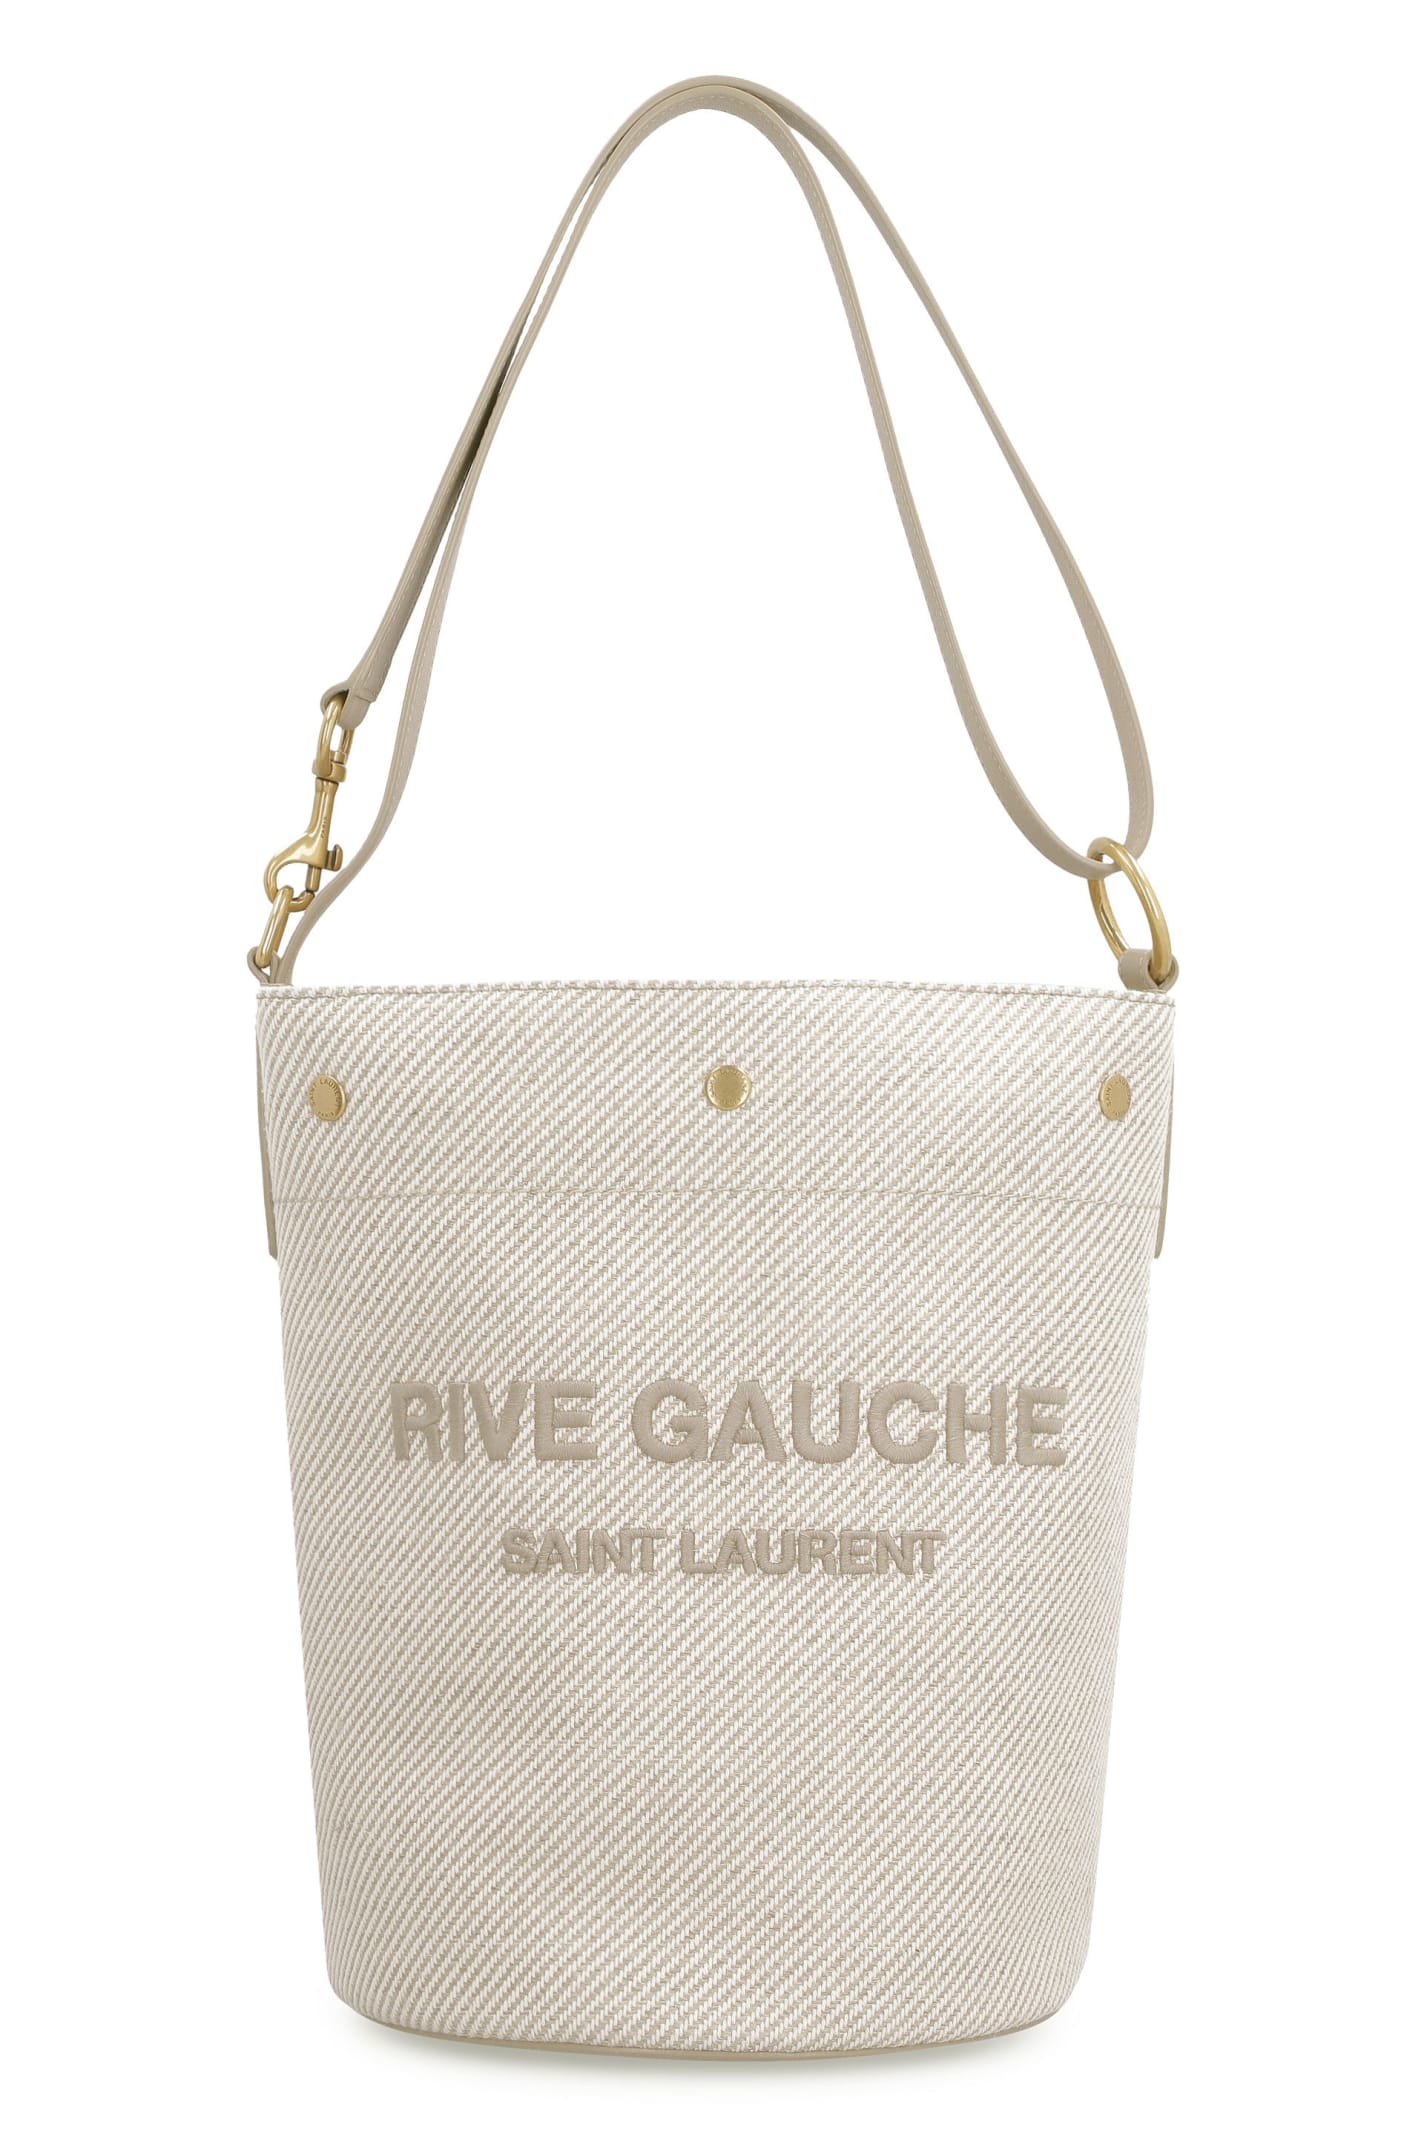 Saint Laurent Rive Gauche Striped Canvas Tote Bag In Multi